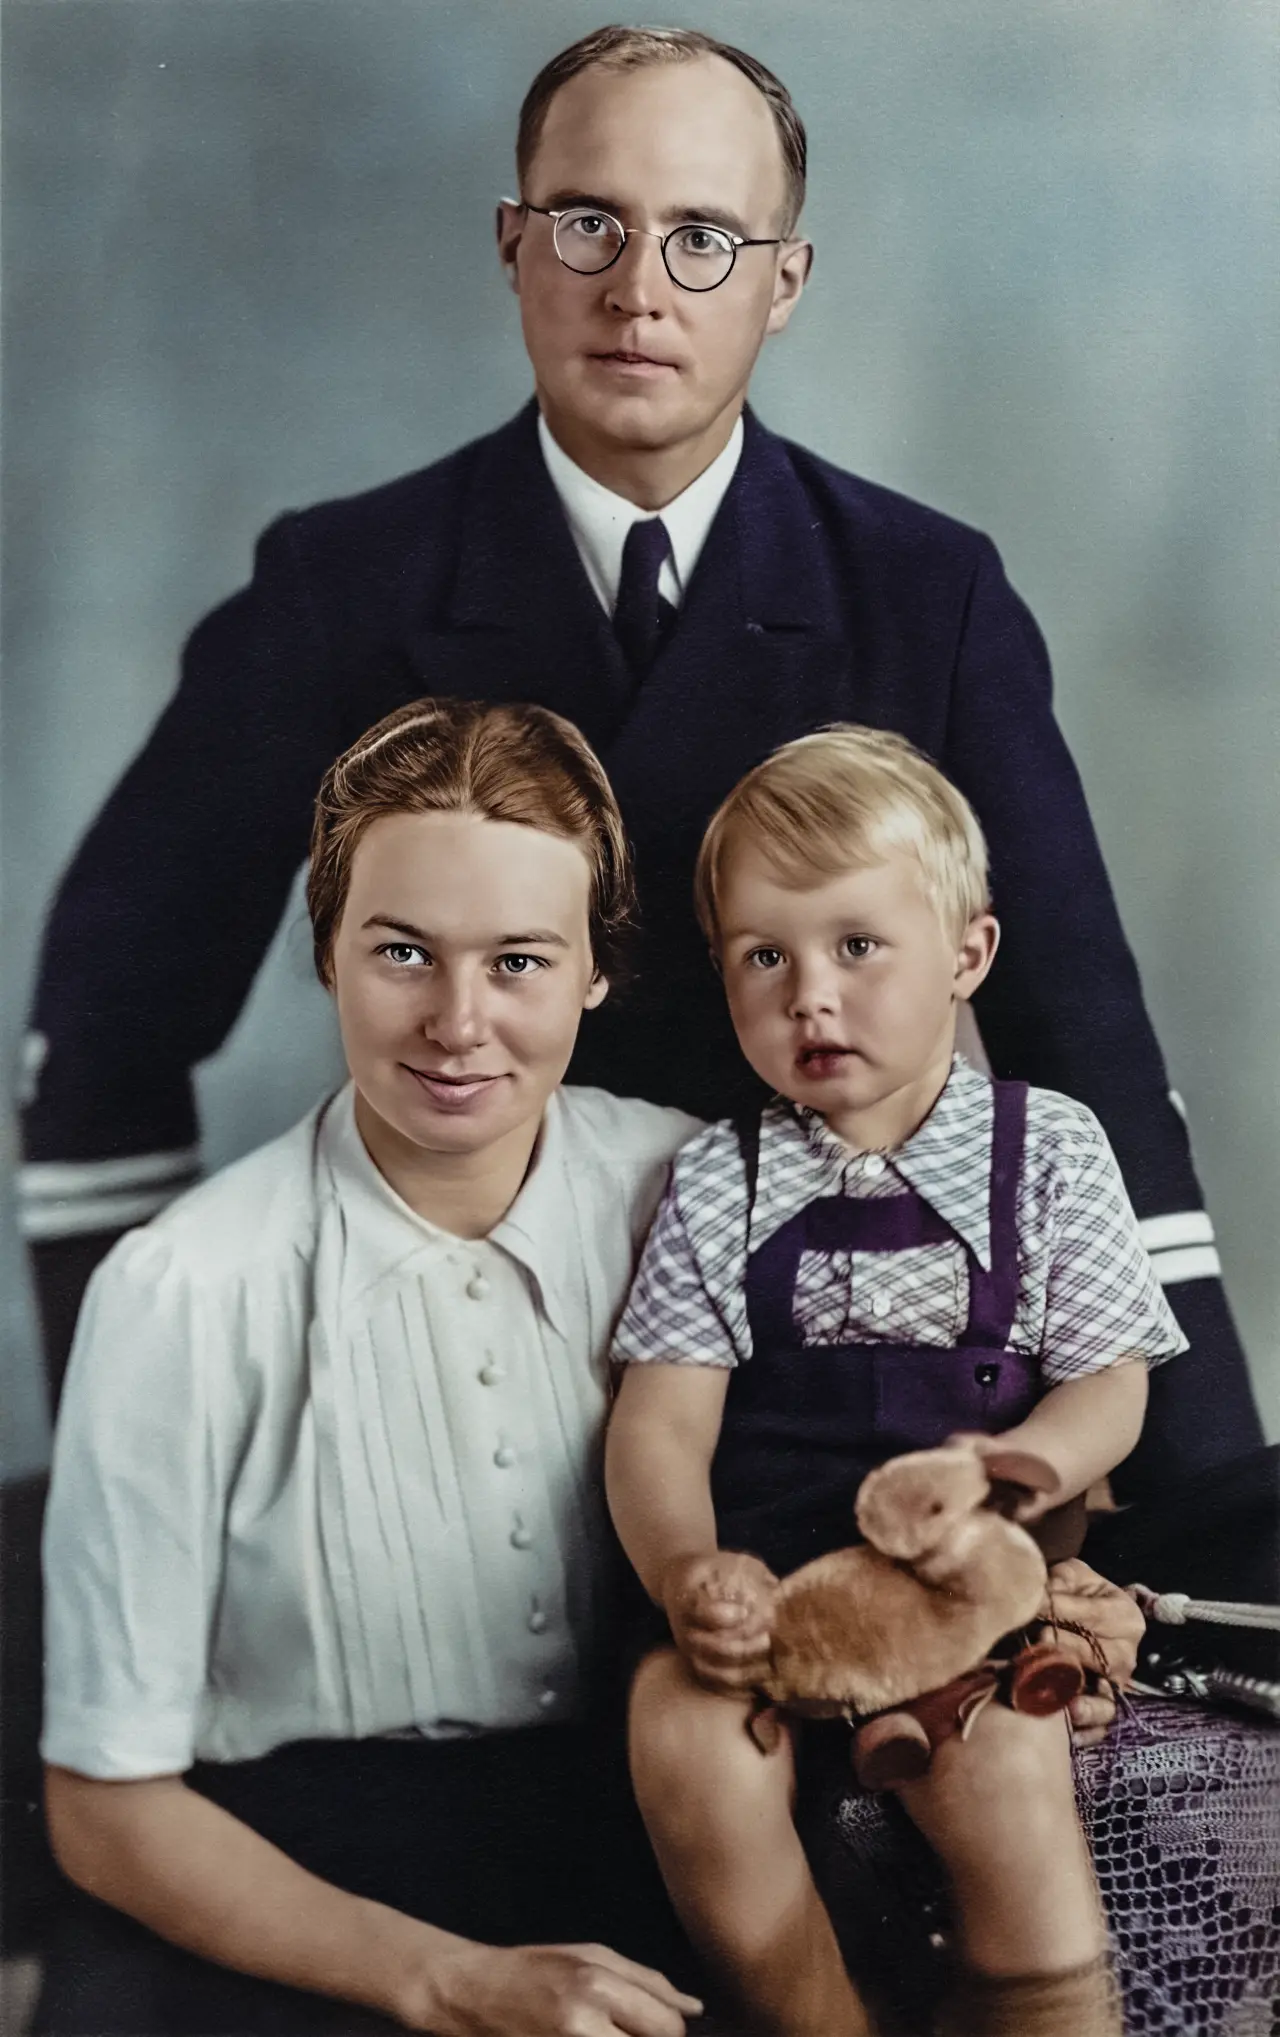 Wilhelm Dege with his wife Liselotte Dege and son Eckart Dege